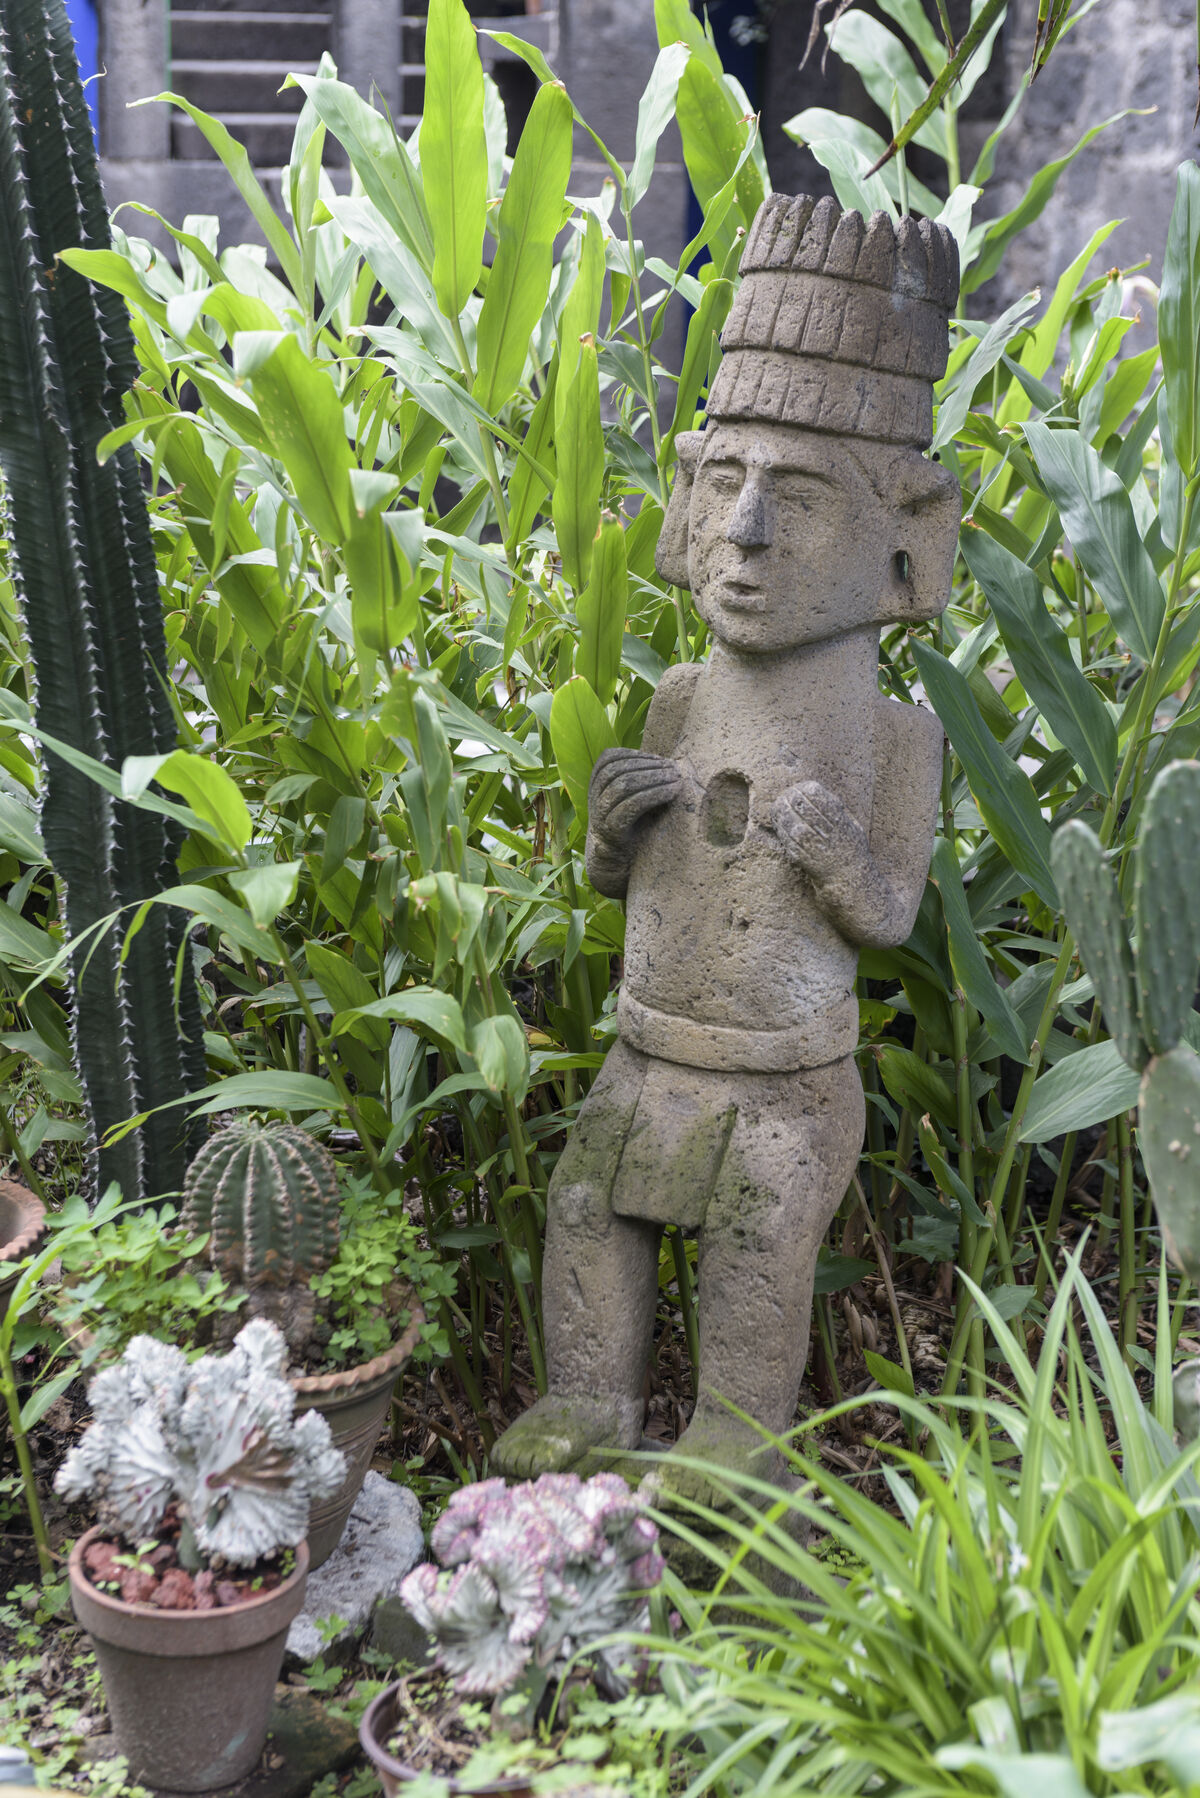 Figurine in Frida Kahlo’s garden. Courtesy of Museo Frida Kahlo.